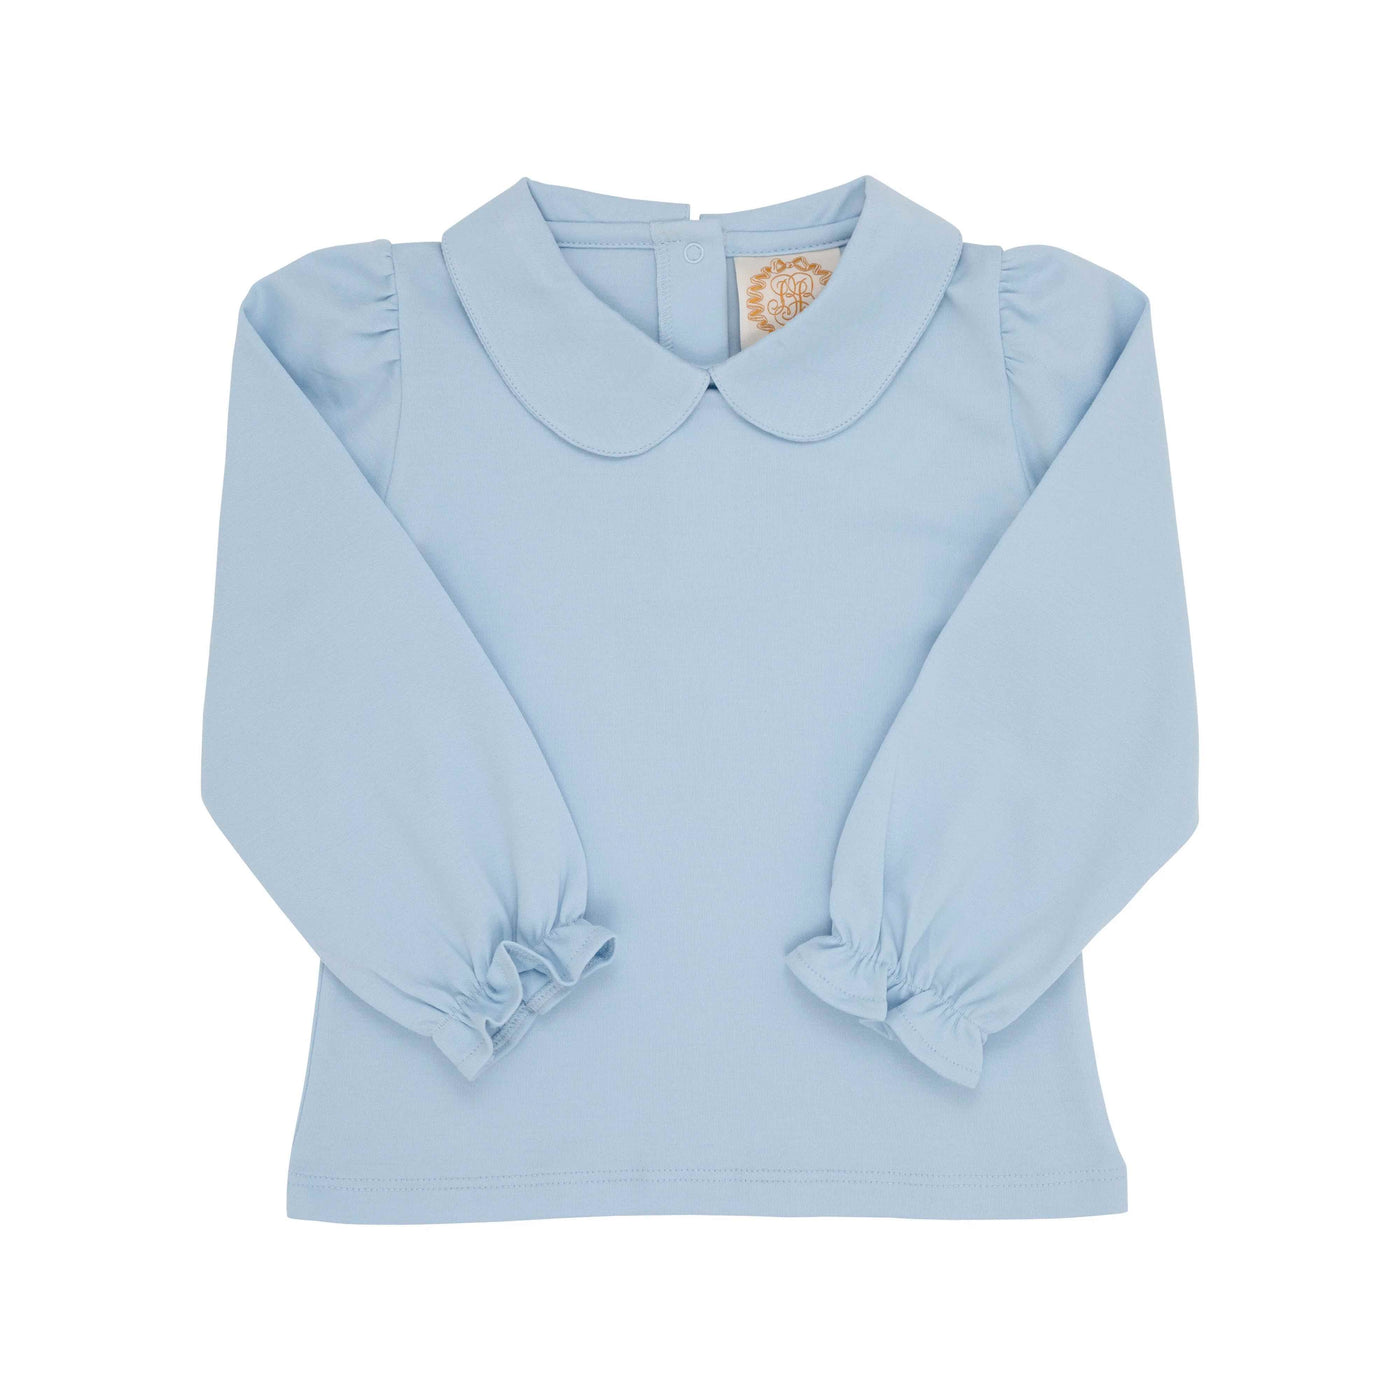 Maudes Peter Pan Collar Shirt - Pima - Buckhead Blue